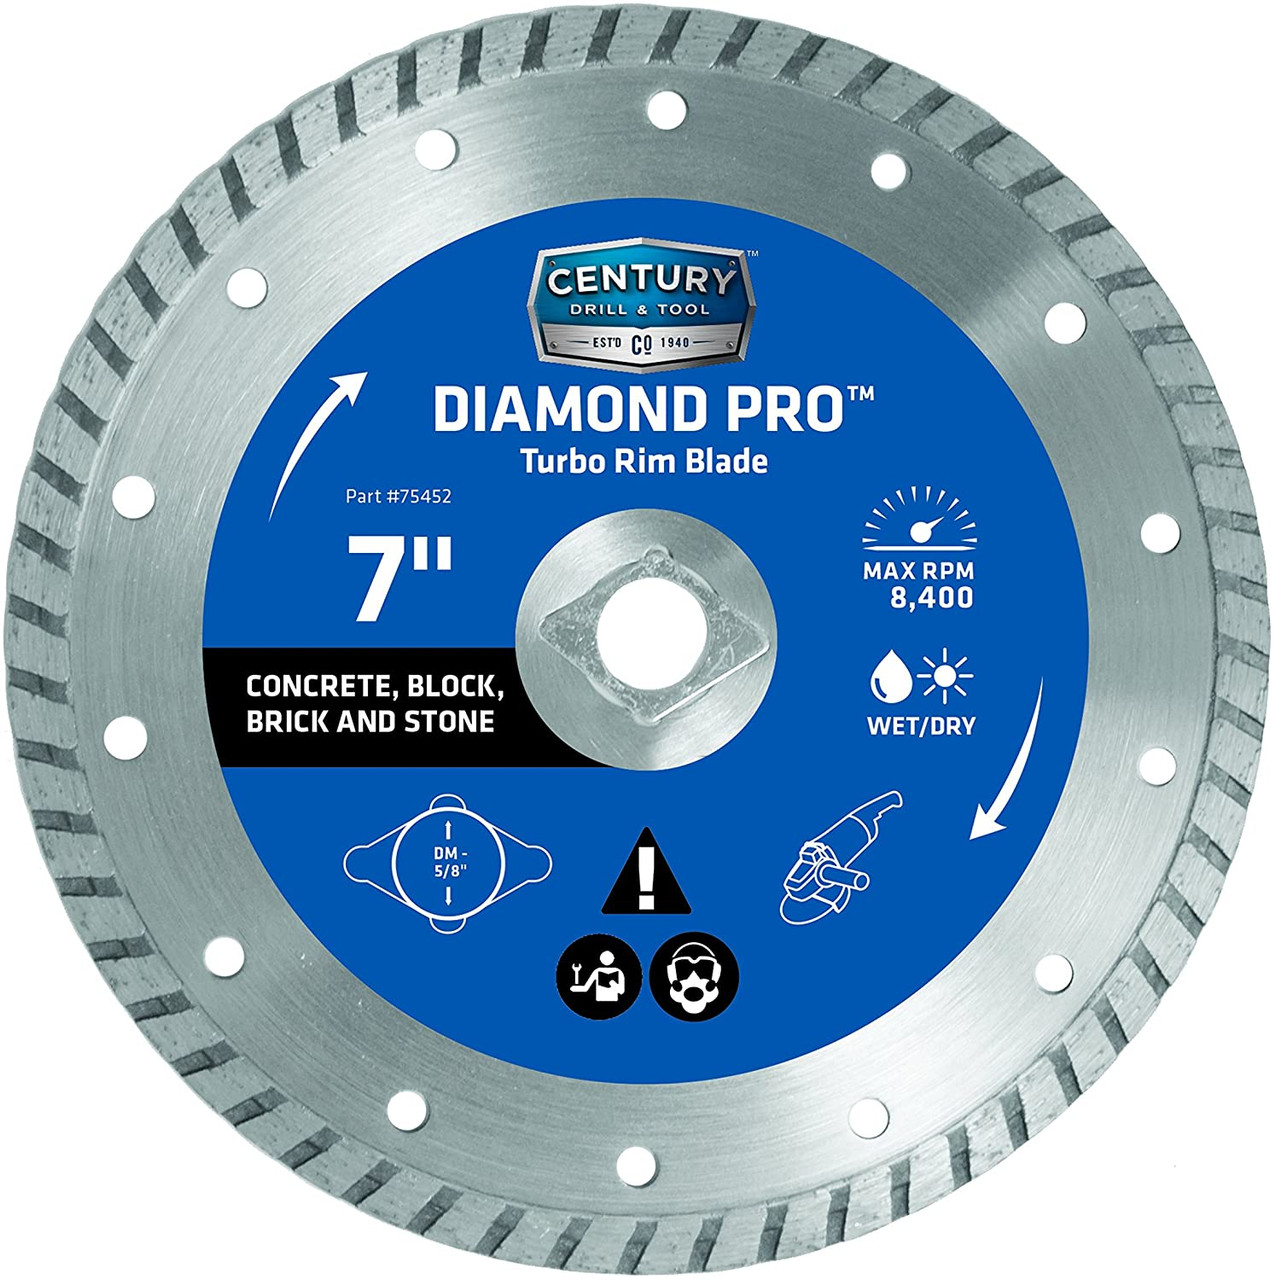 Century Drill and Tool 75452 Professional Turbo Rim Diamond Saw Blade, 7-Inch